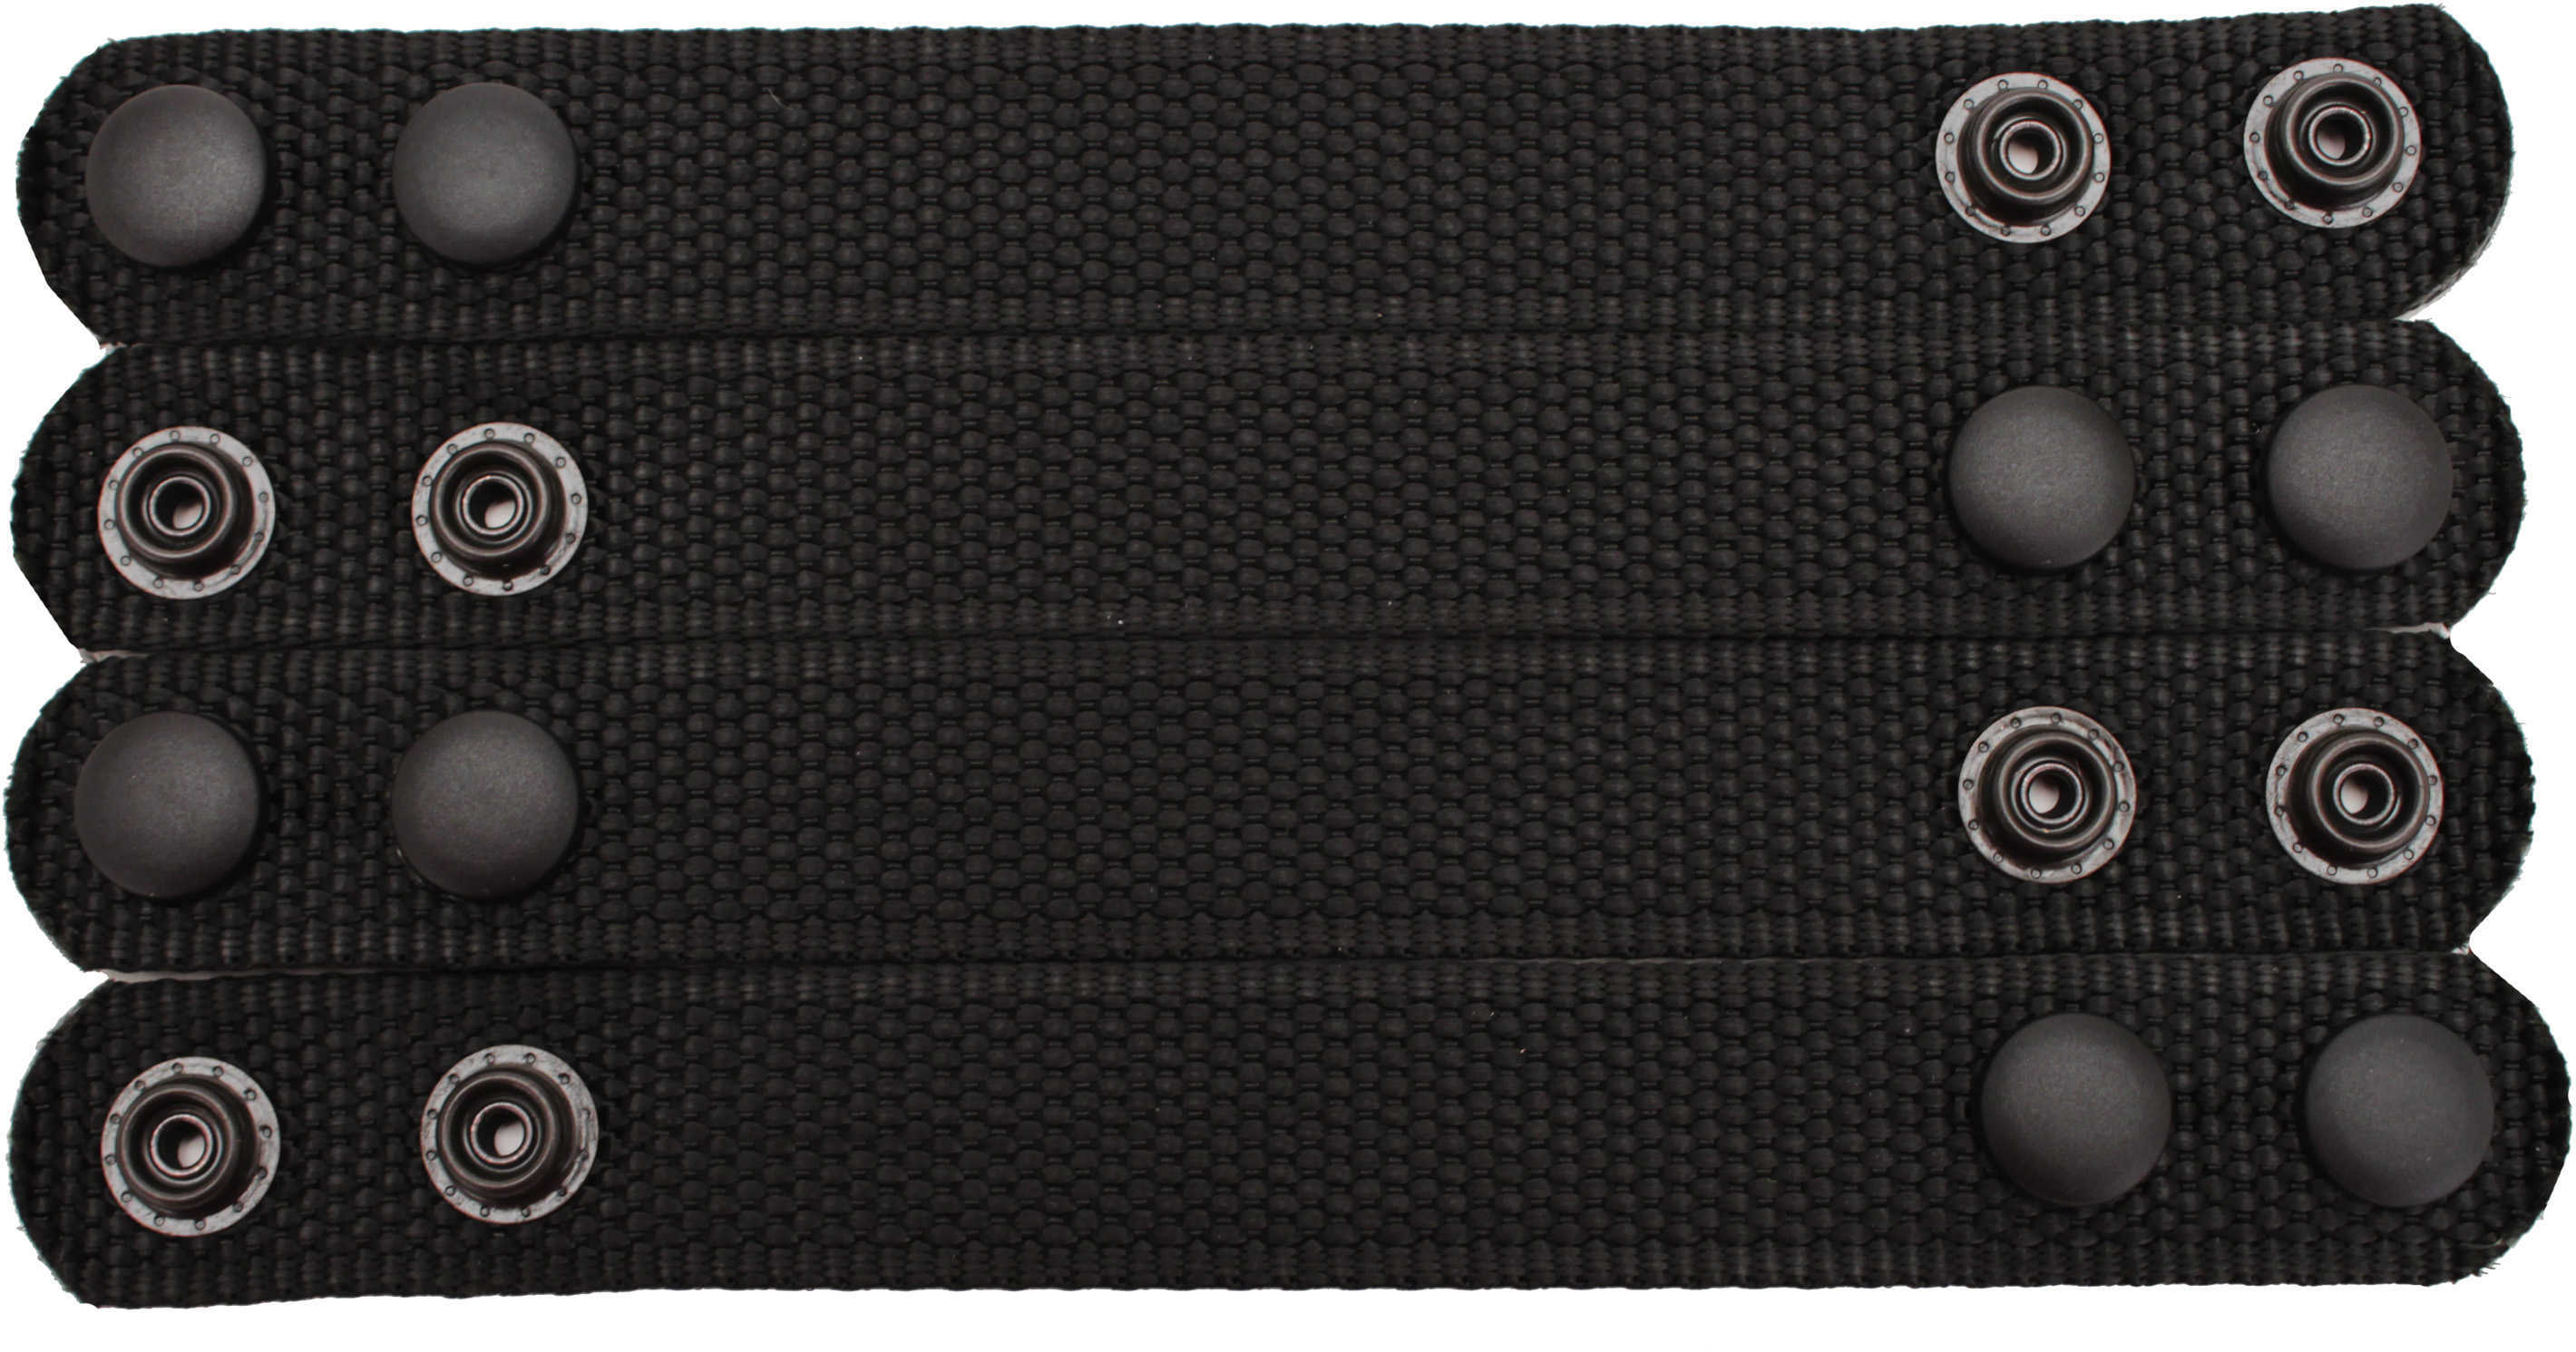 Bianchi 6406 Ranger Belt Keepers (4 Pack) Black, Velcro 15634